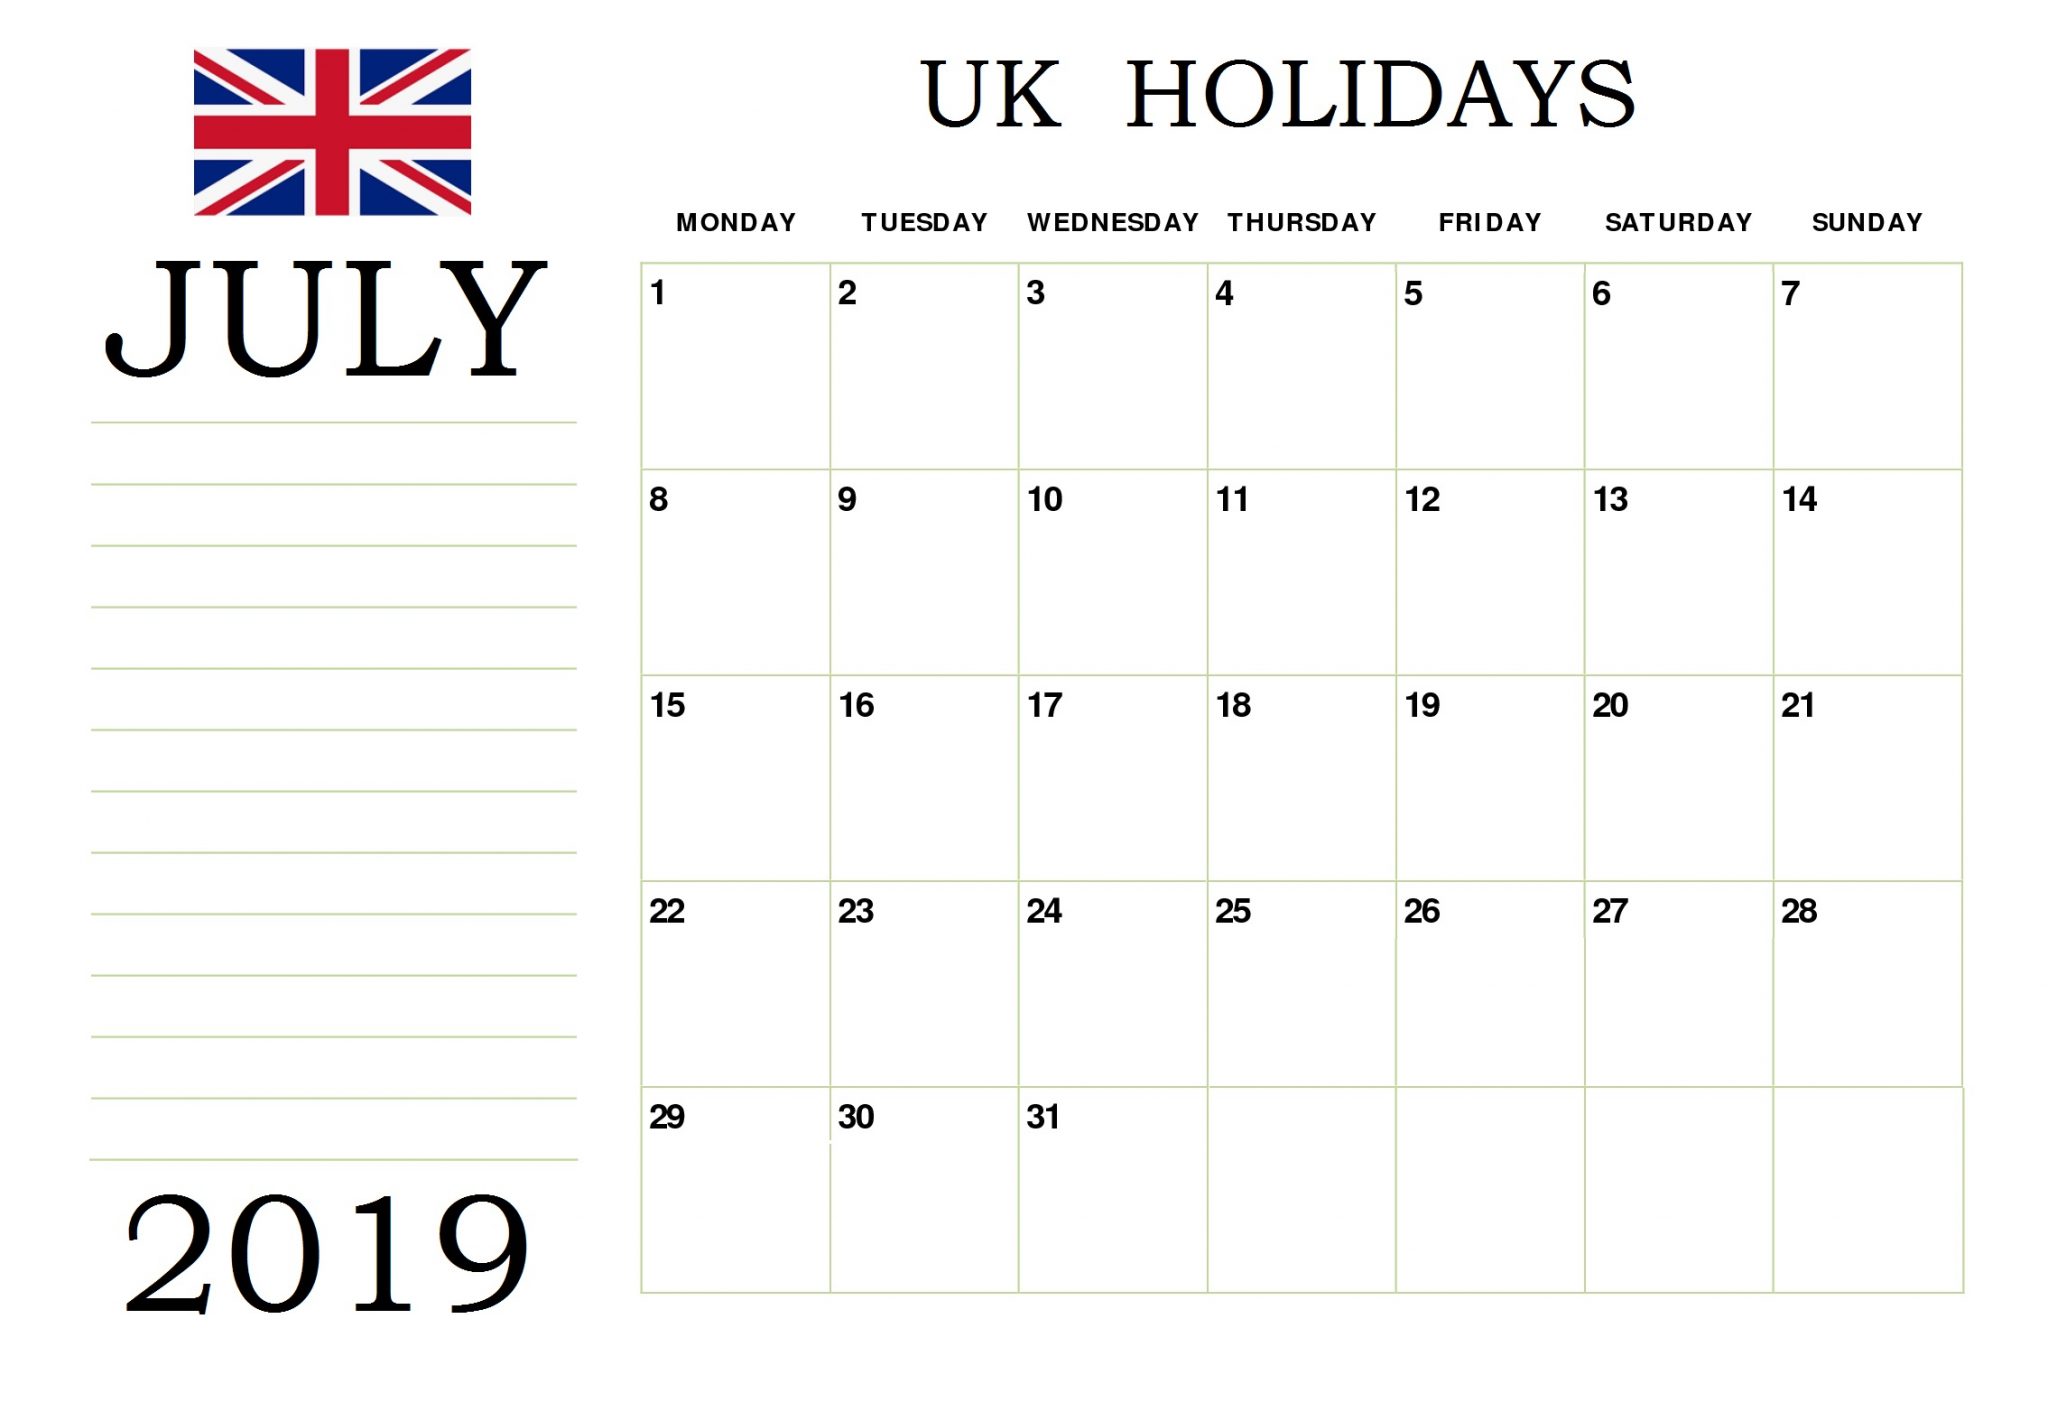 UK July 2019 Public Holidays Calendar